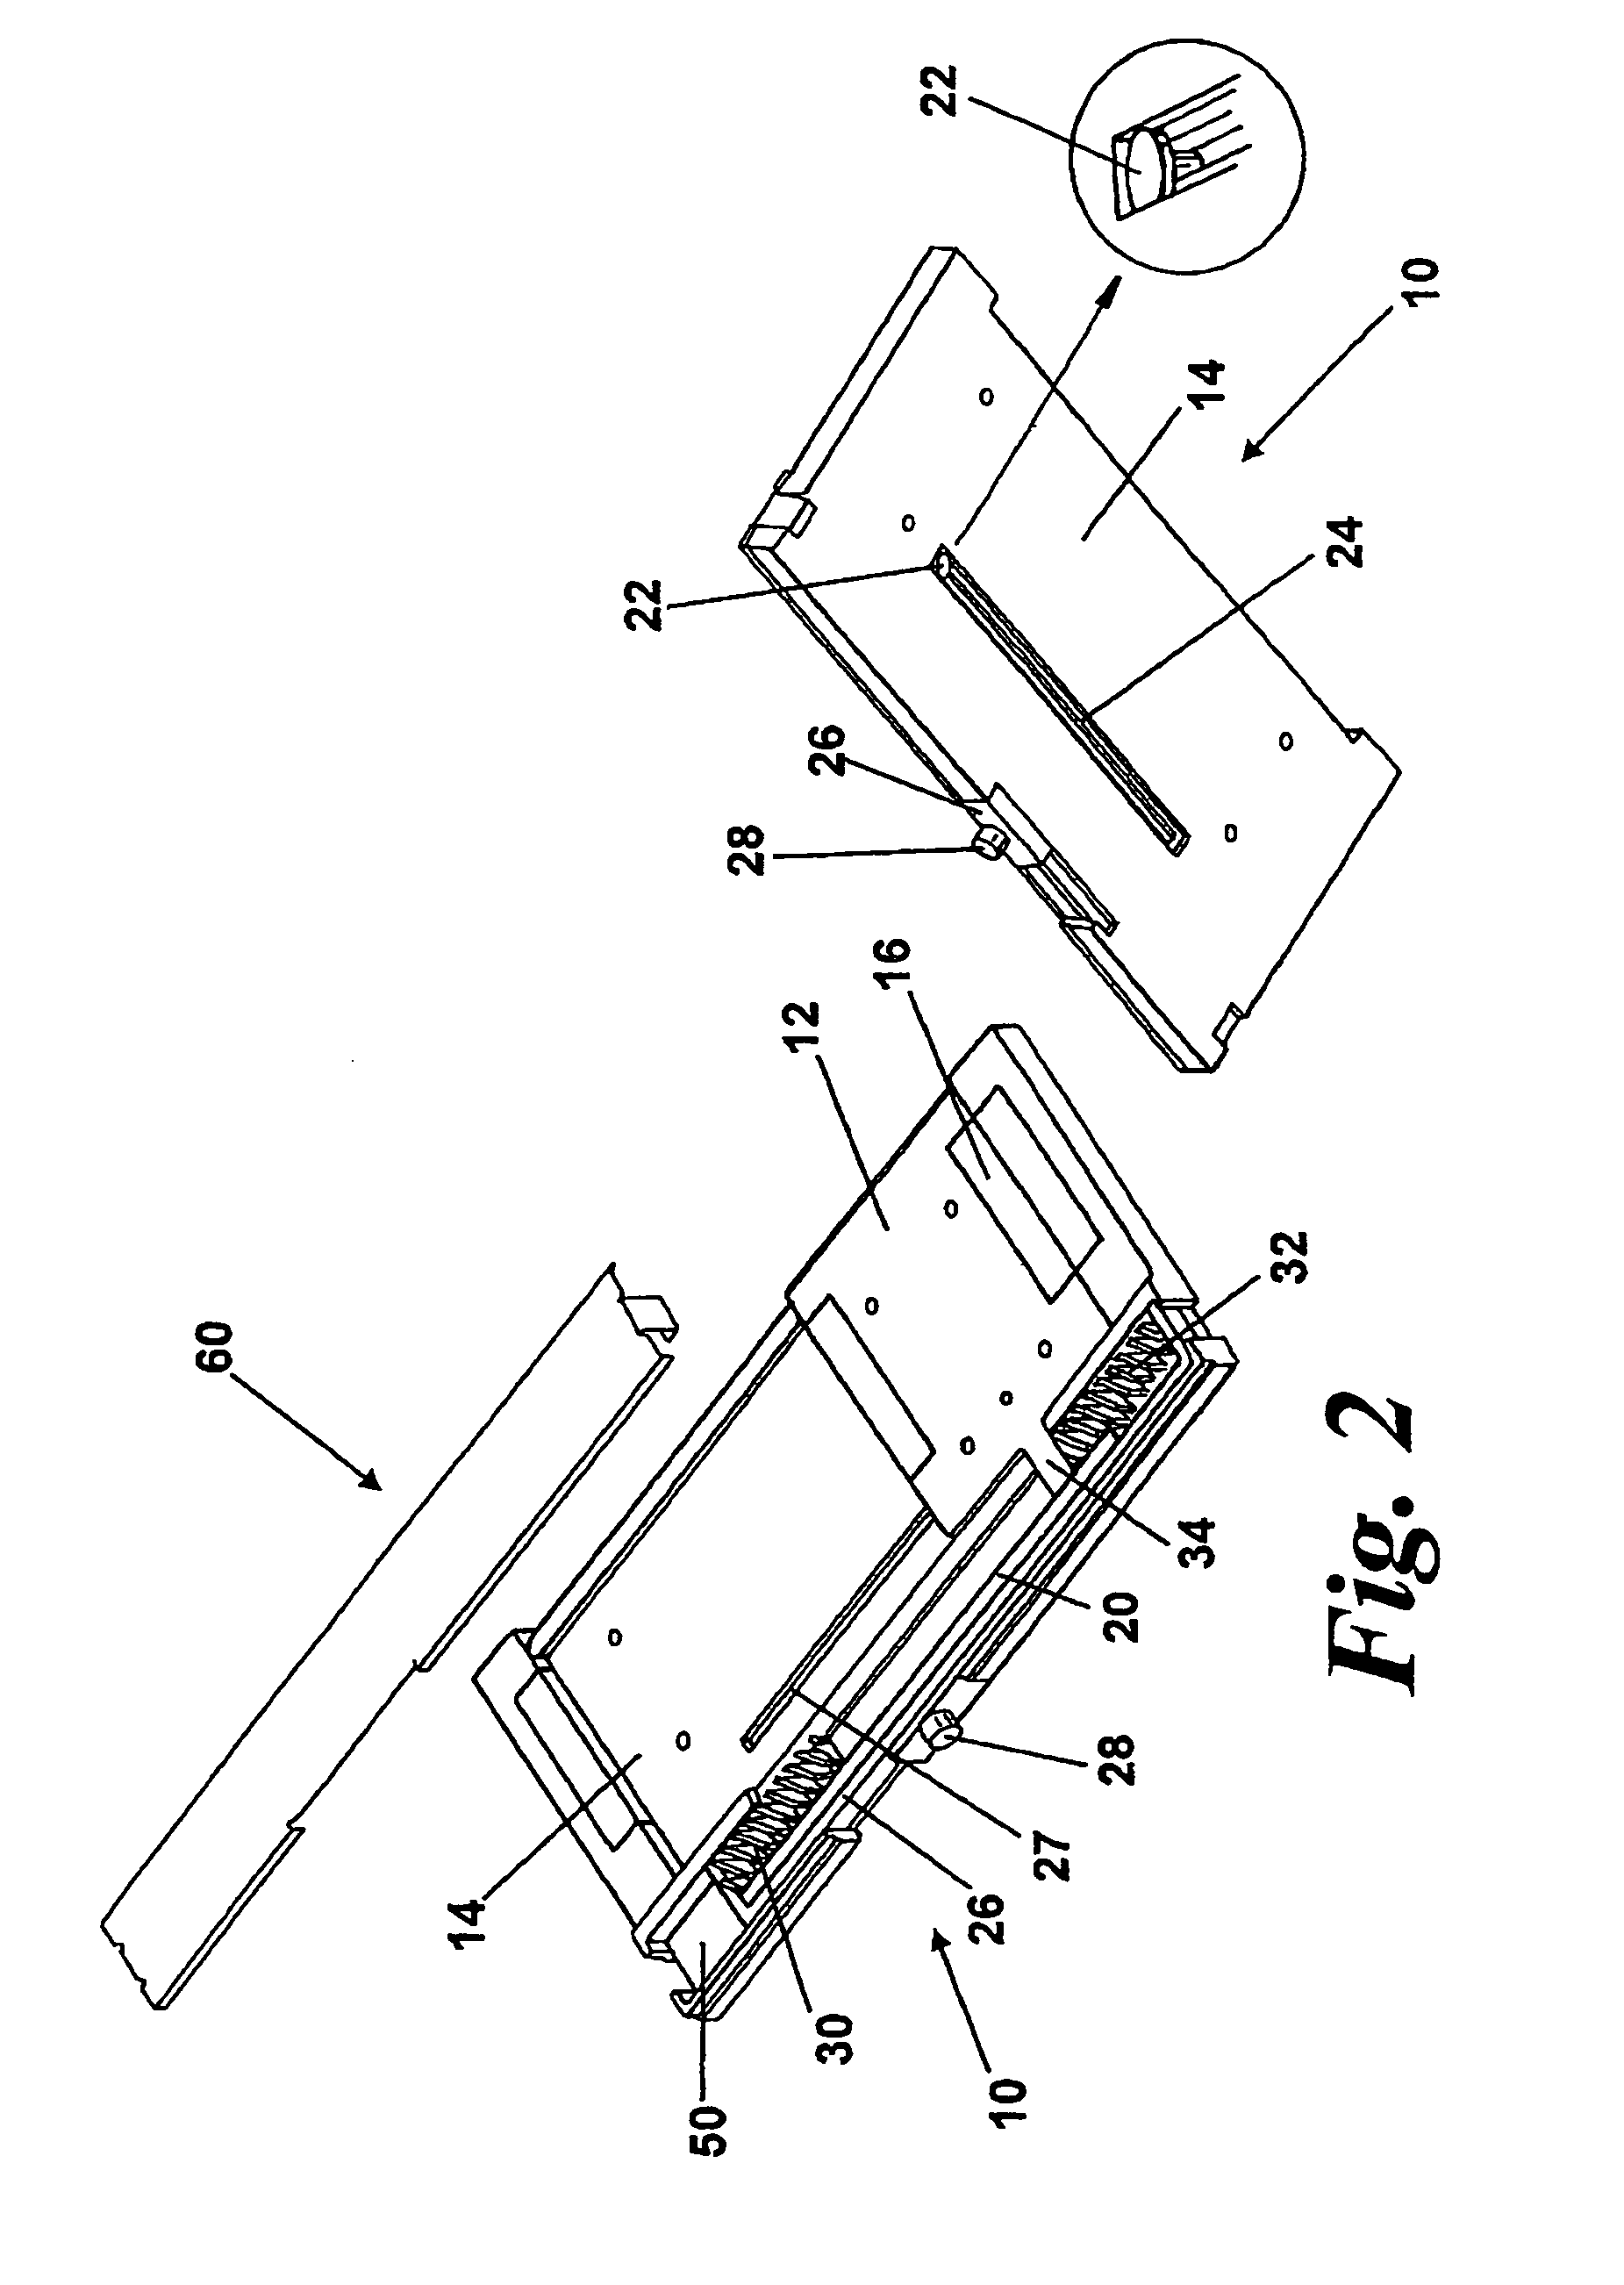 Electronic device sliding mechanism